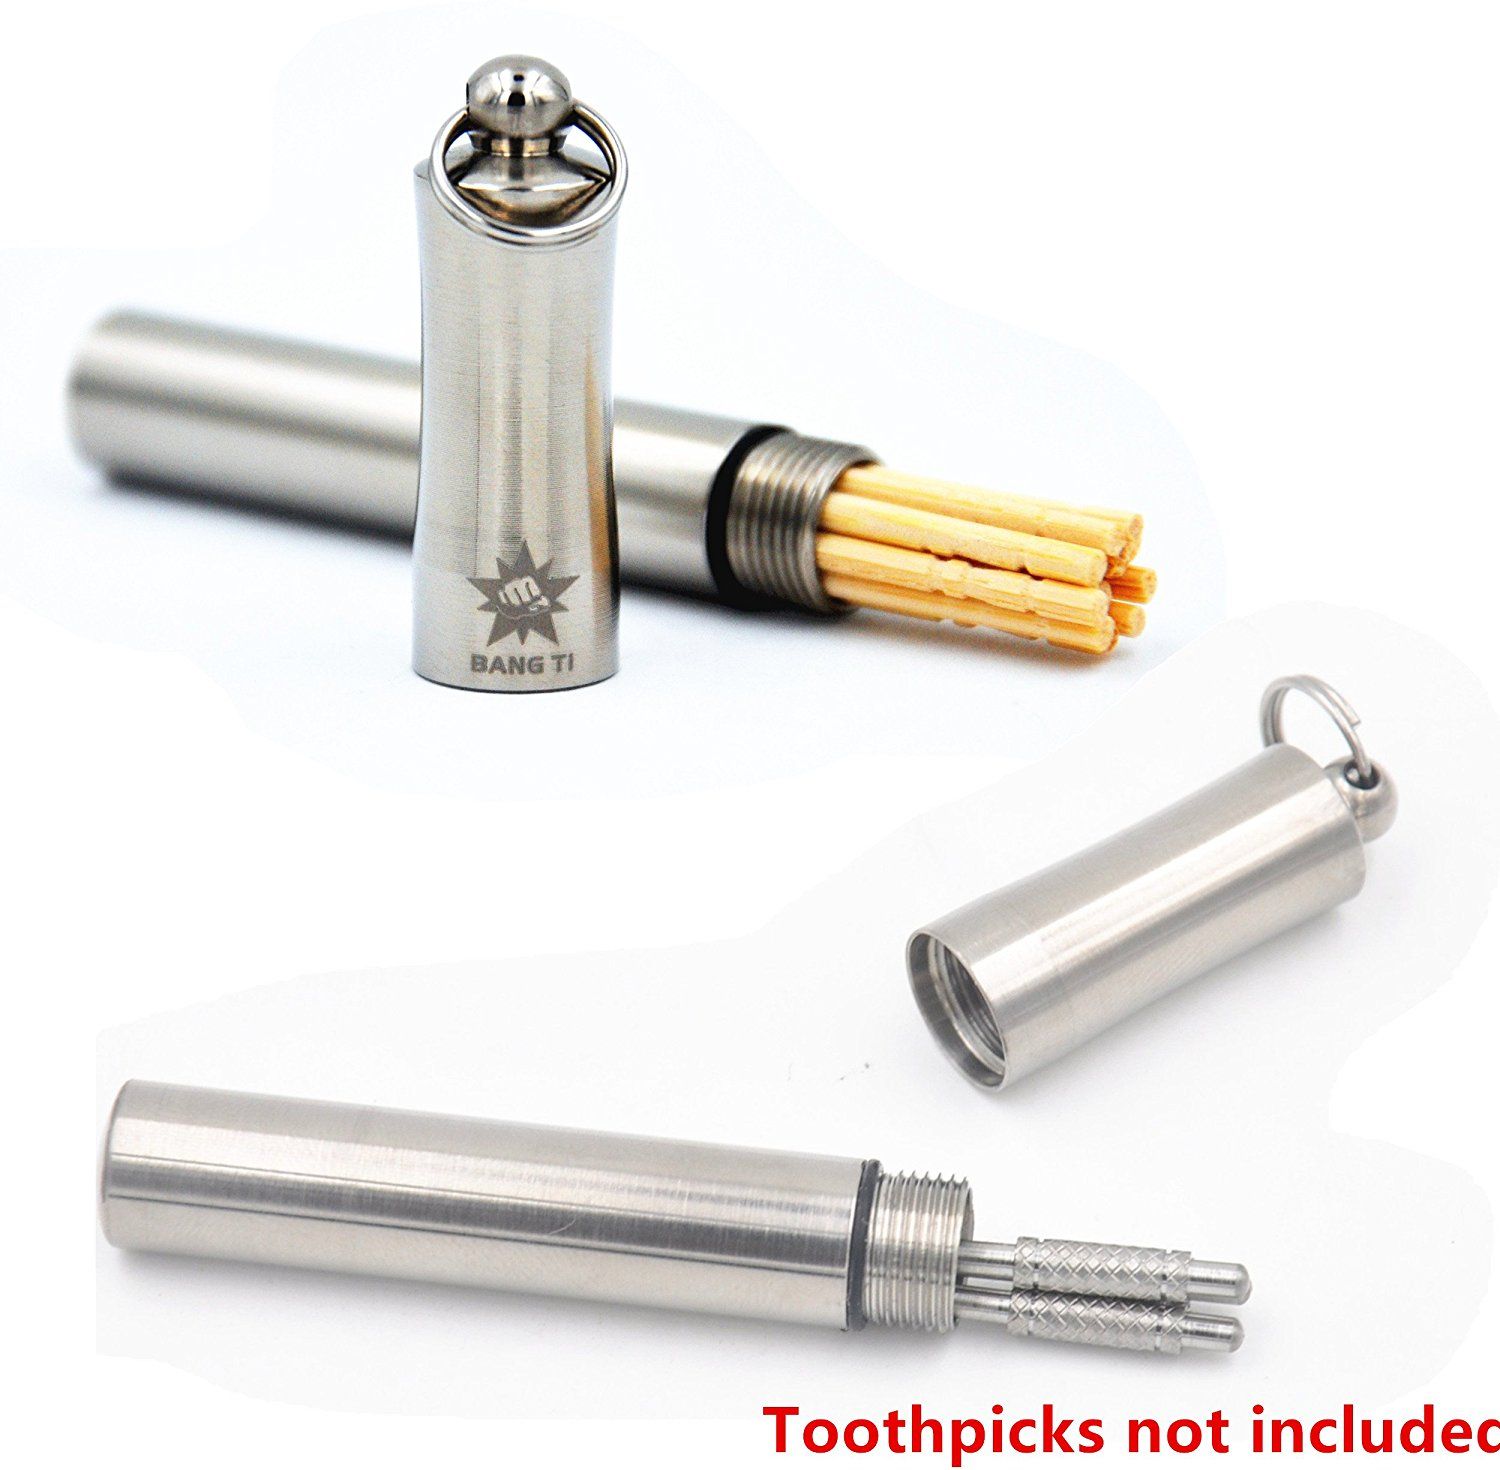 BANG-TI-S-Titanium-Alloy-Waterproof-Toothpick-Holder-Ultralight-Pocket-Travel-Kit-1150898